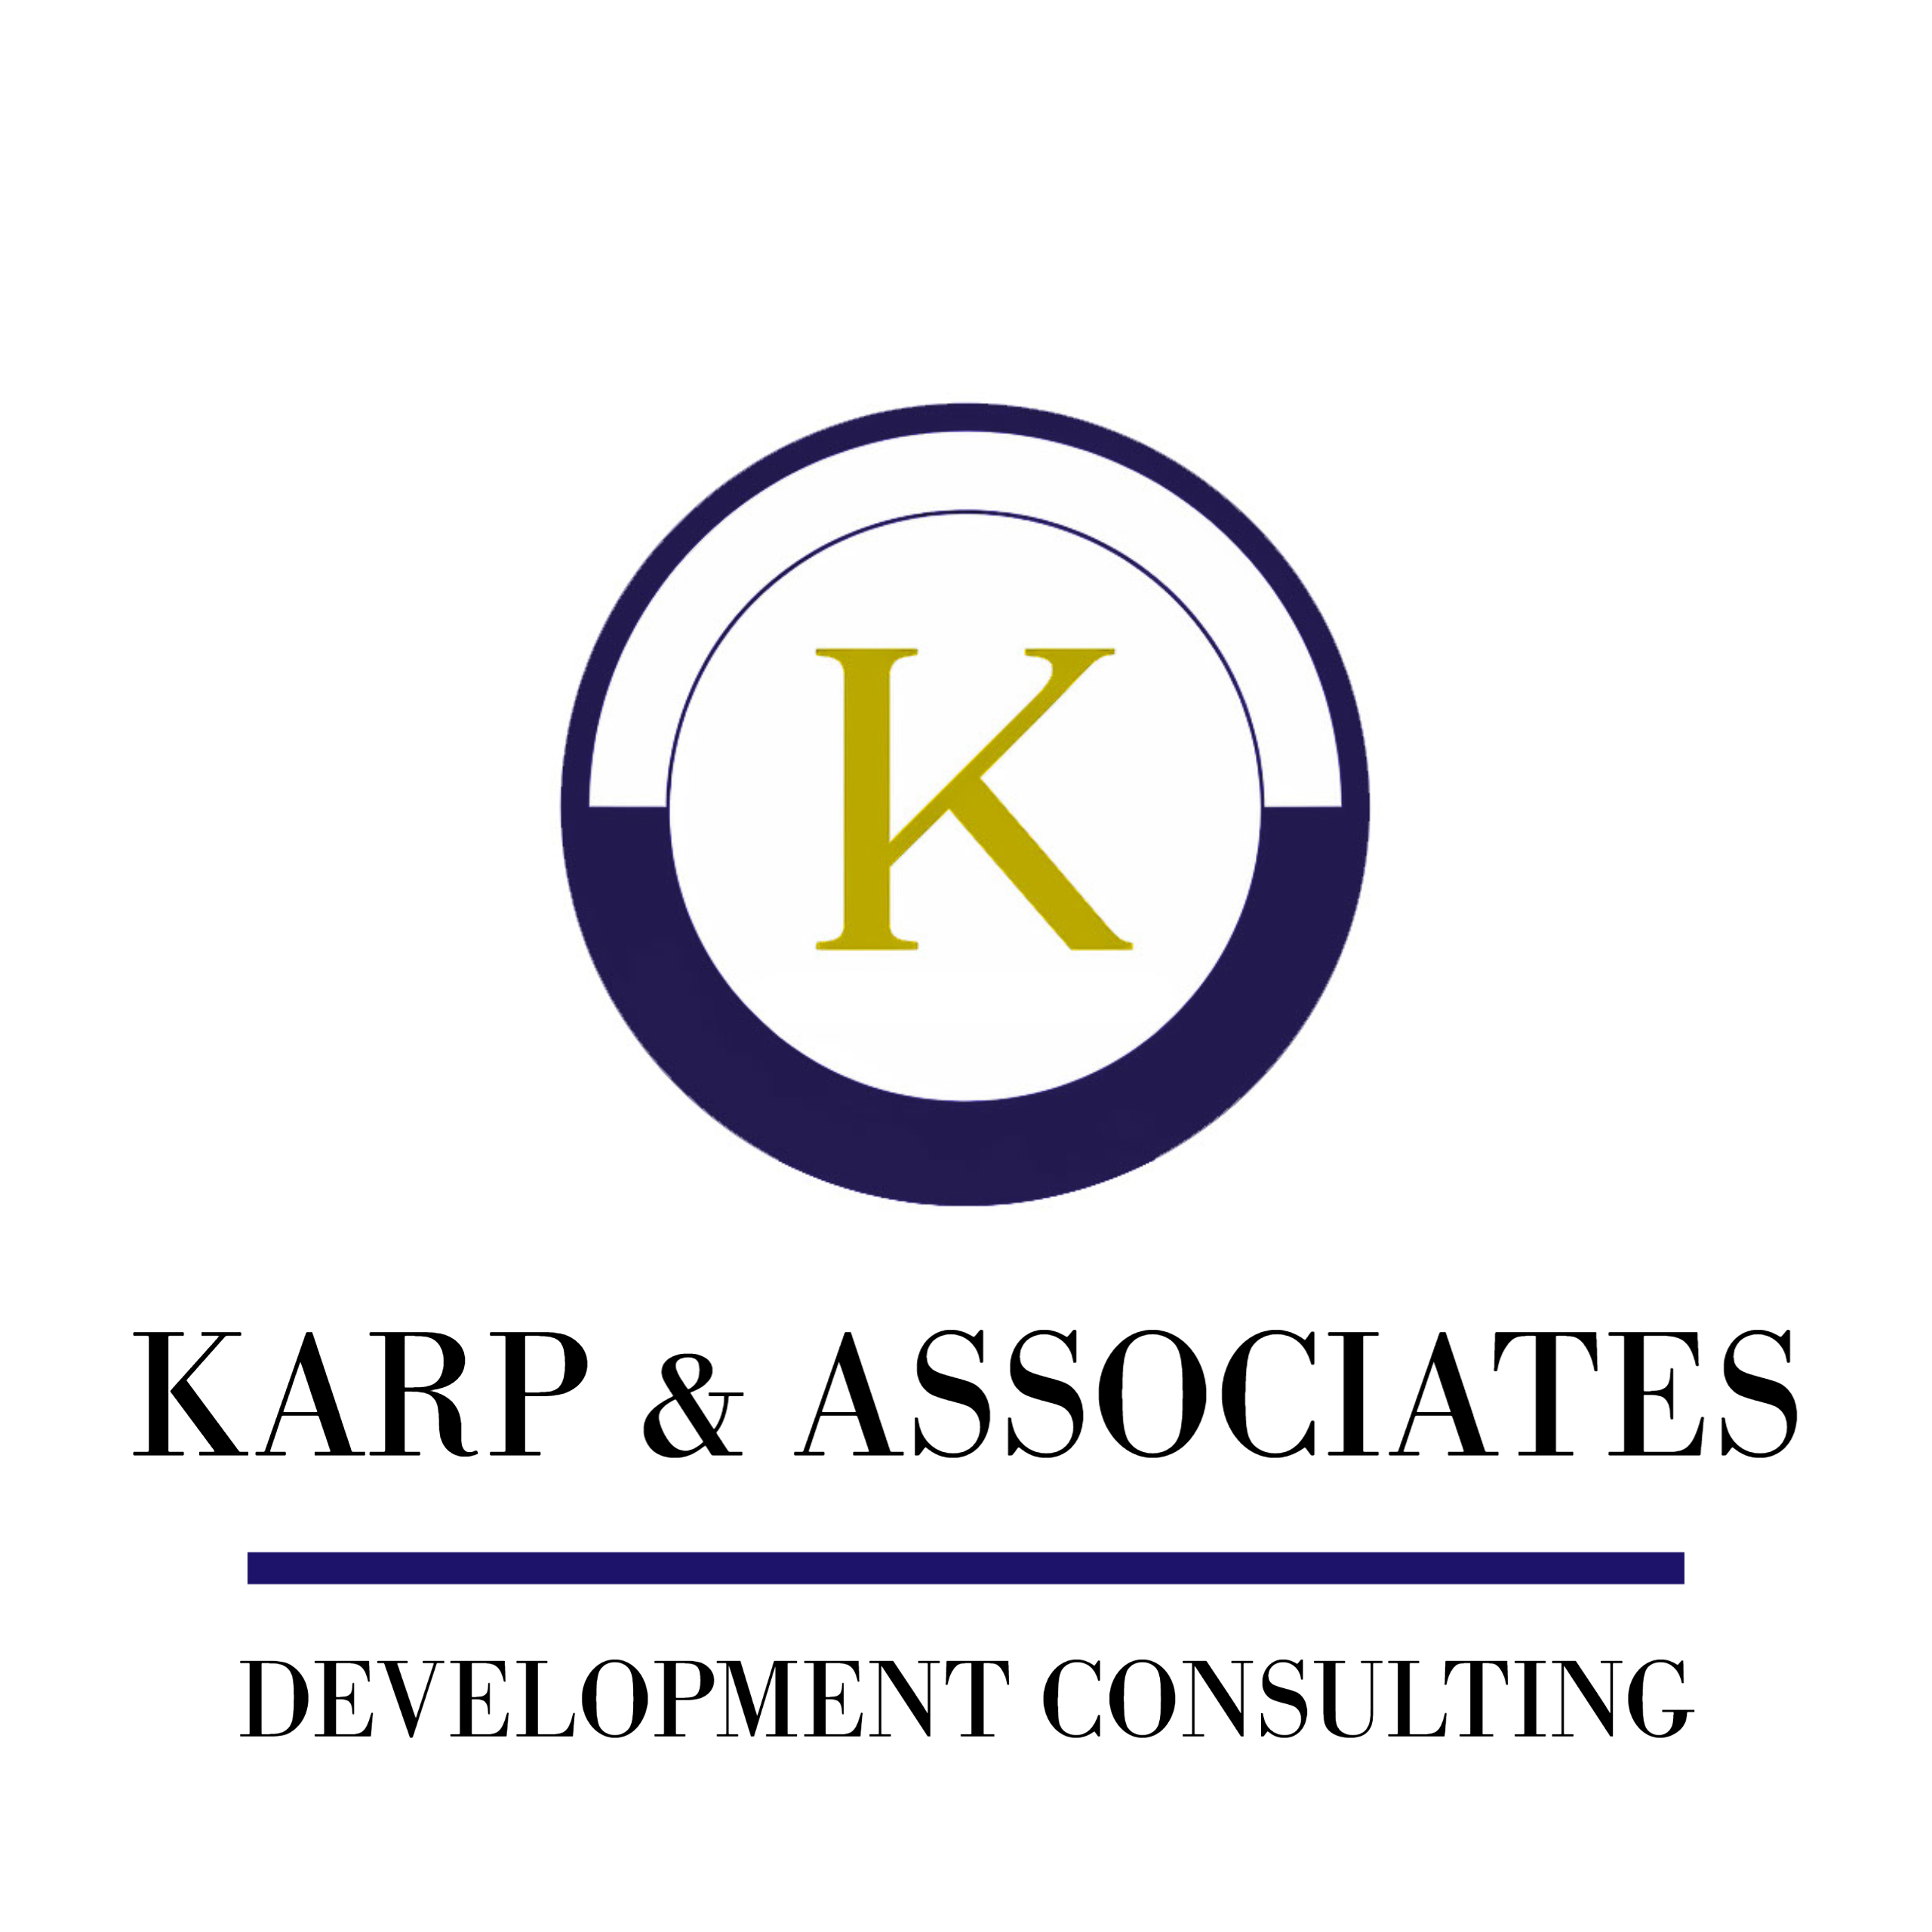 Karp & Associates Consulting